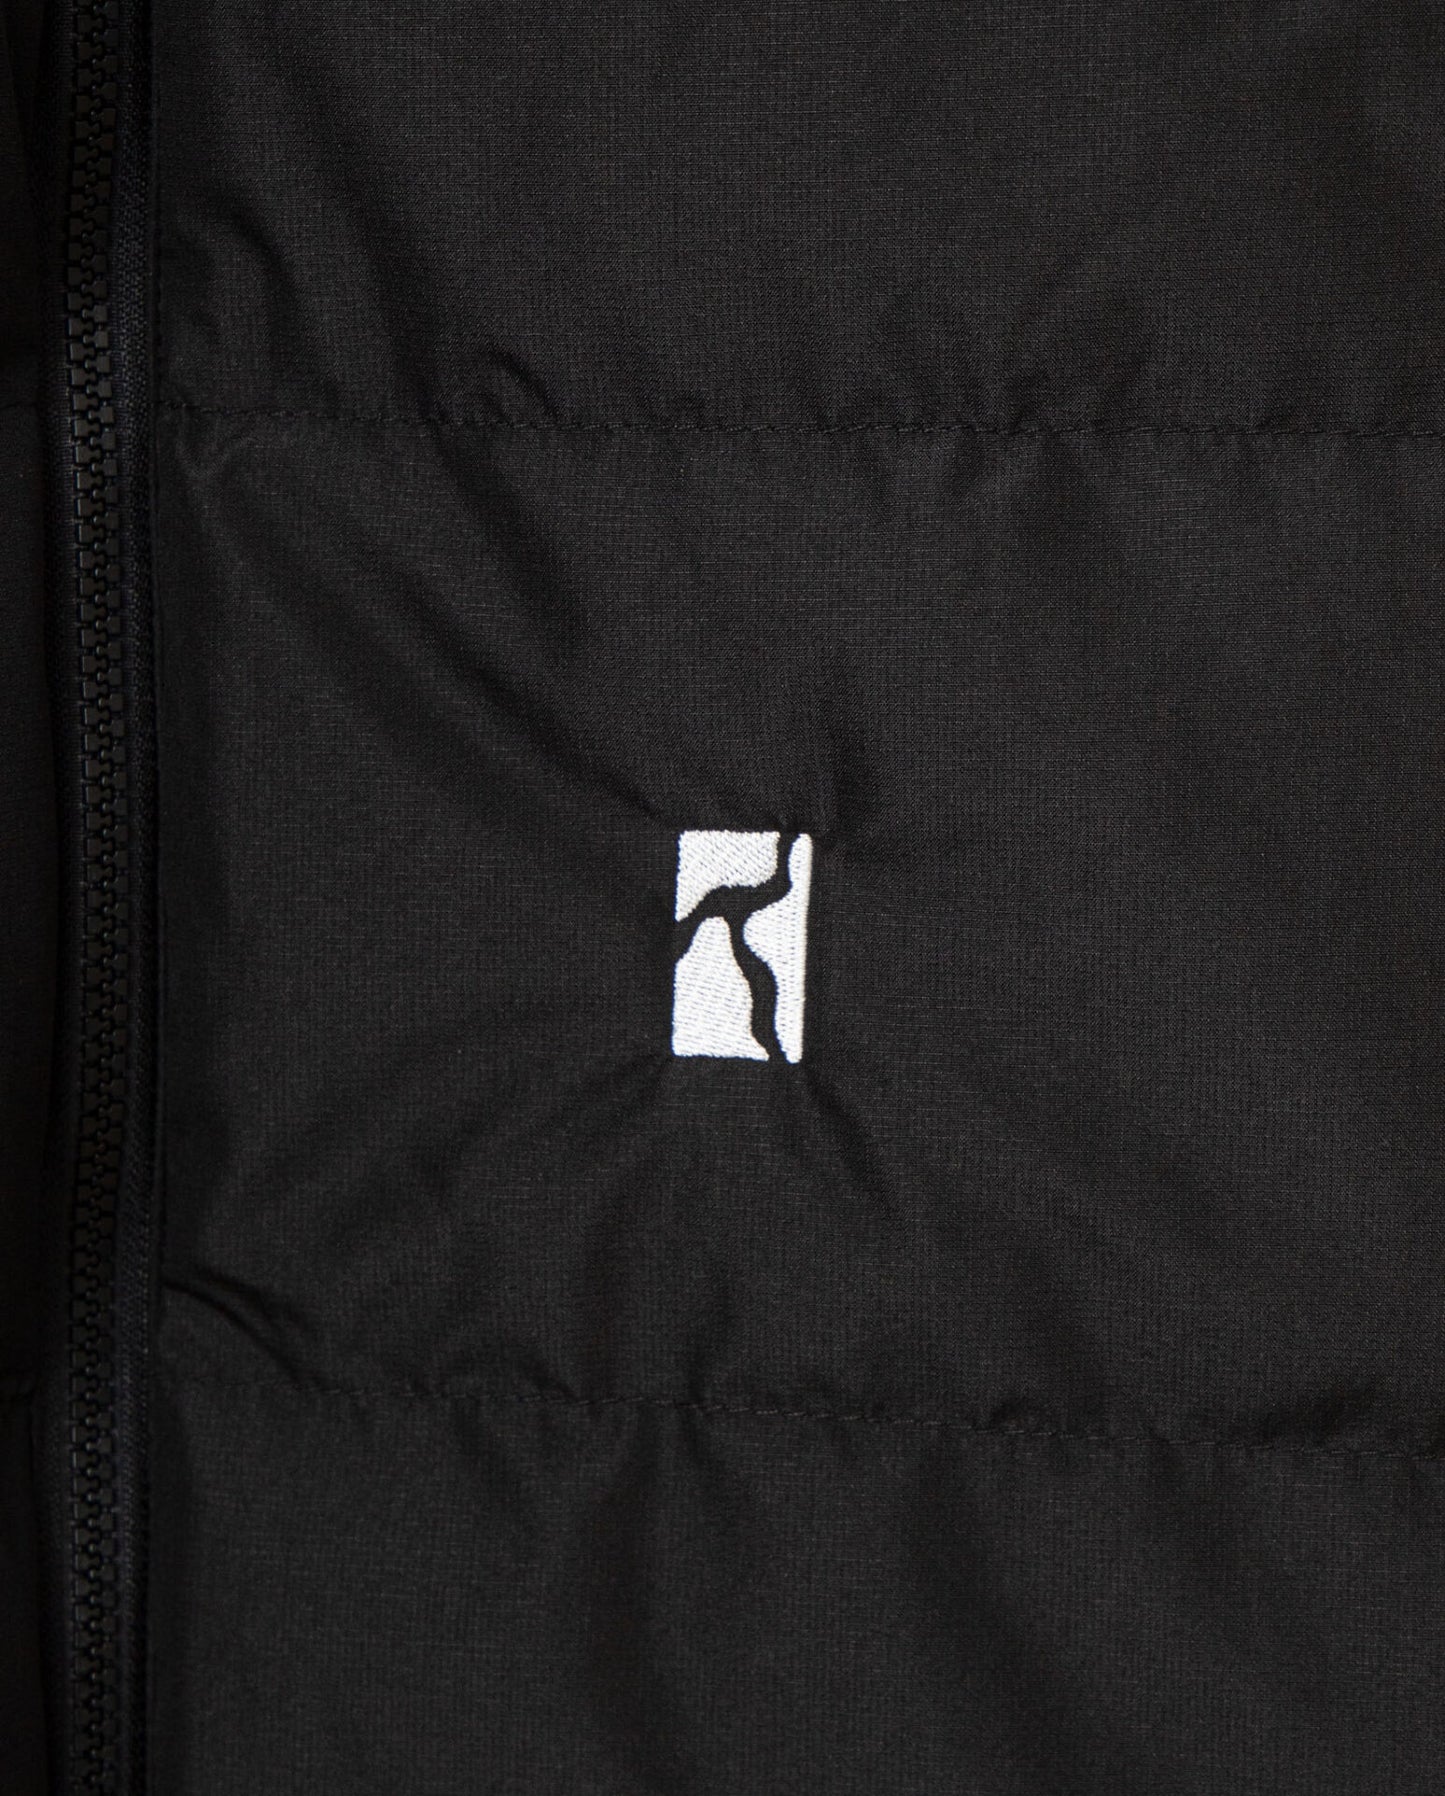 Puffer Jacket – Black